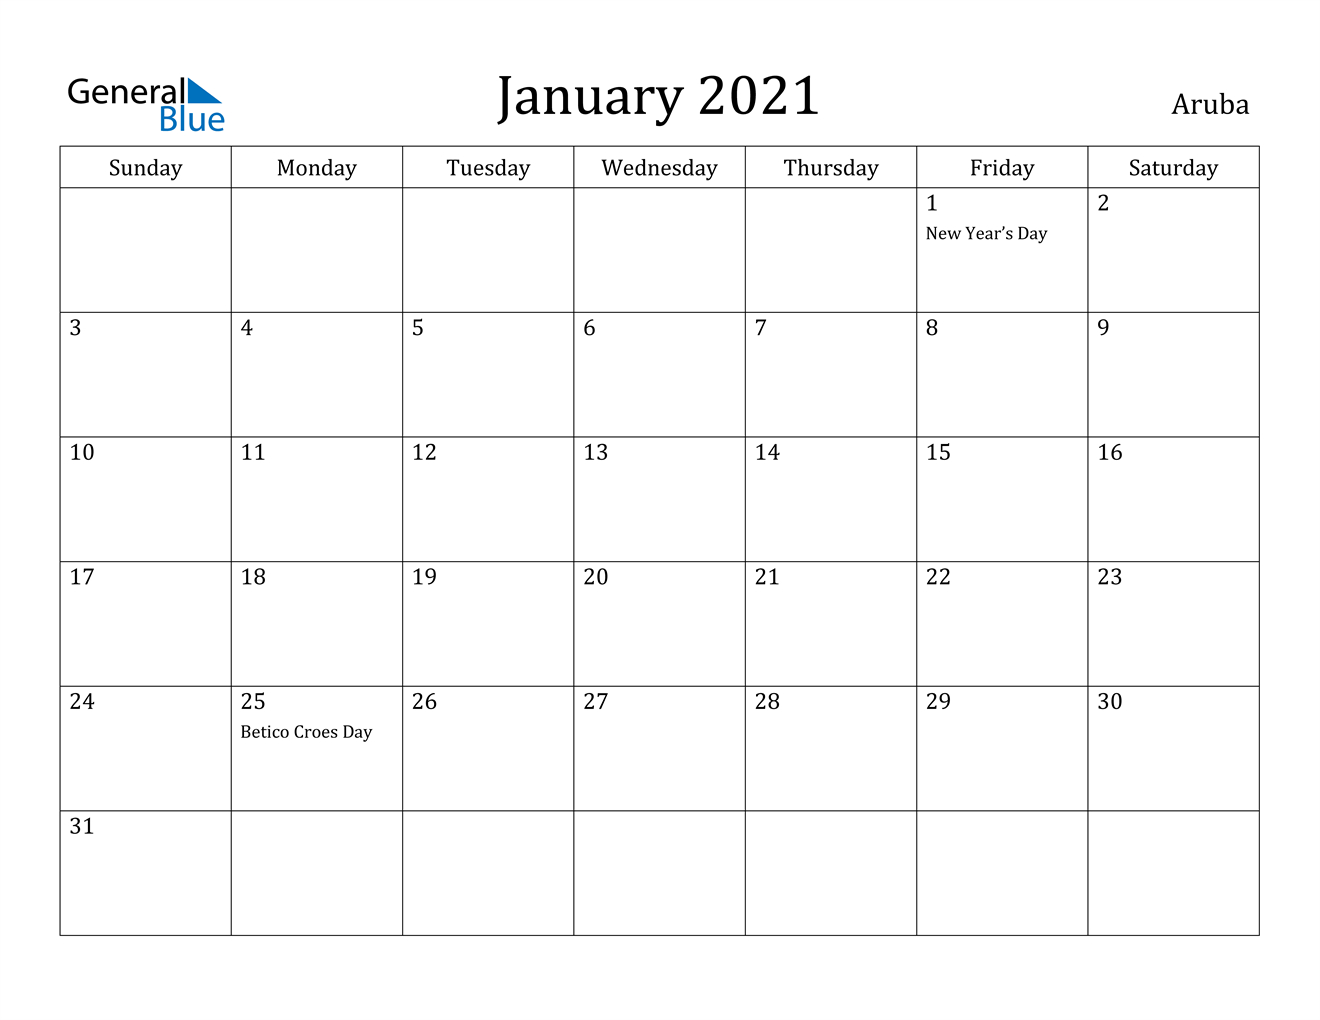 January 2021 Calendar - Aruba